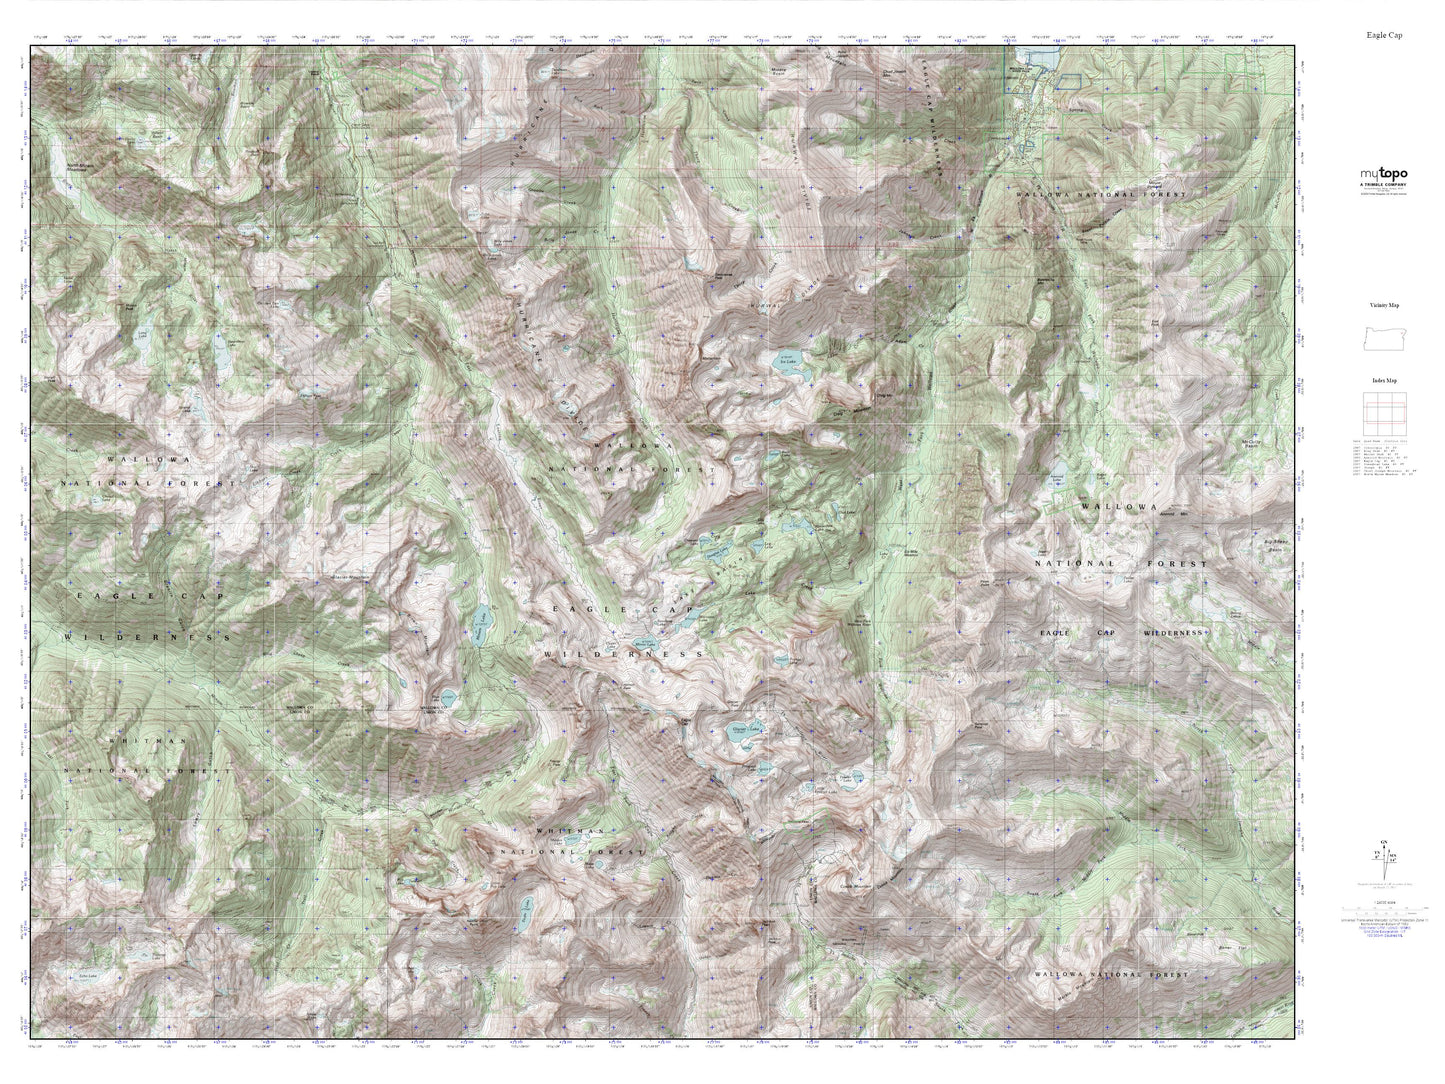 Eagle Cap MyTopo Explorer Series Map Image